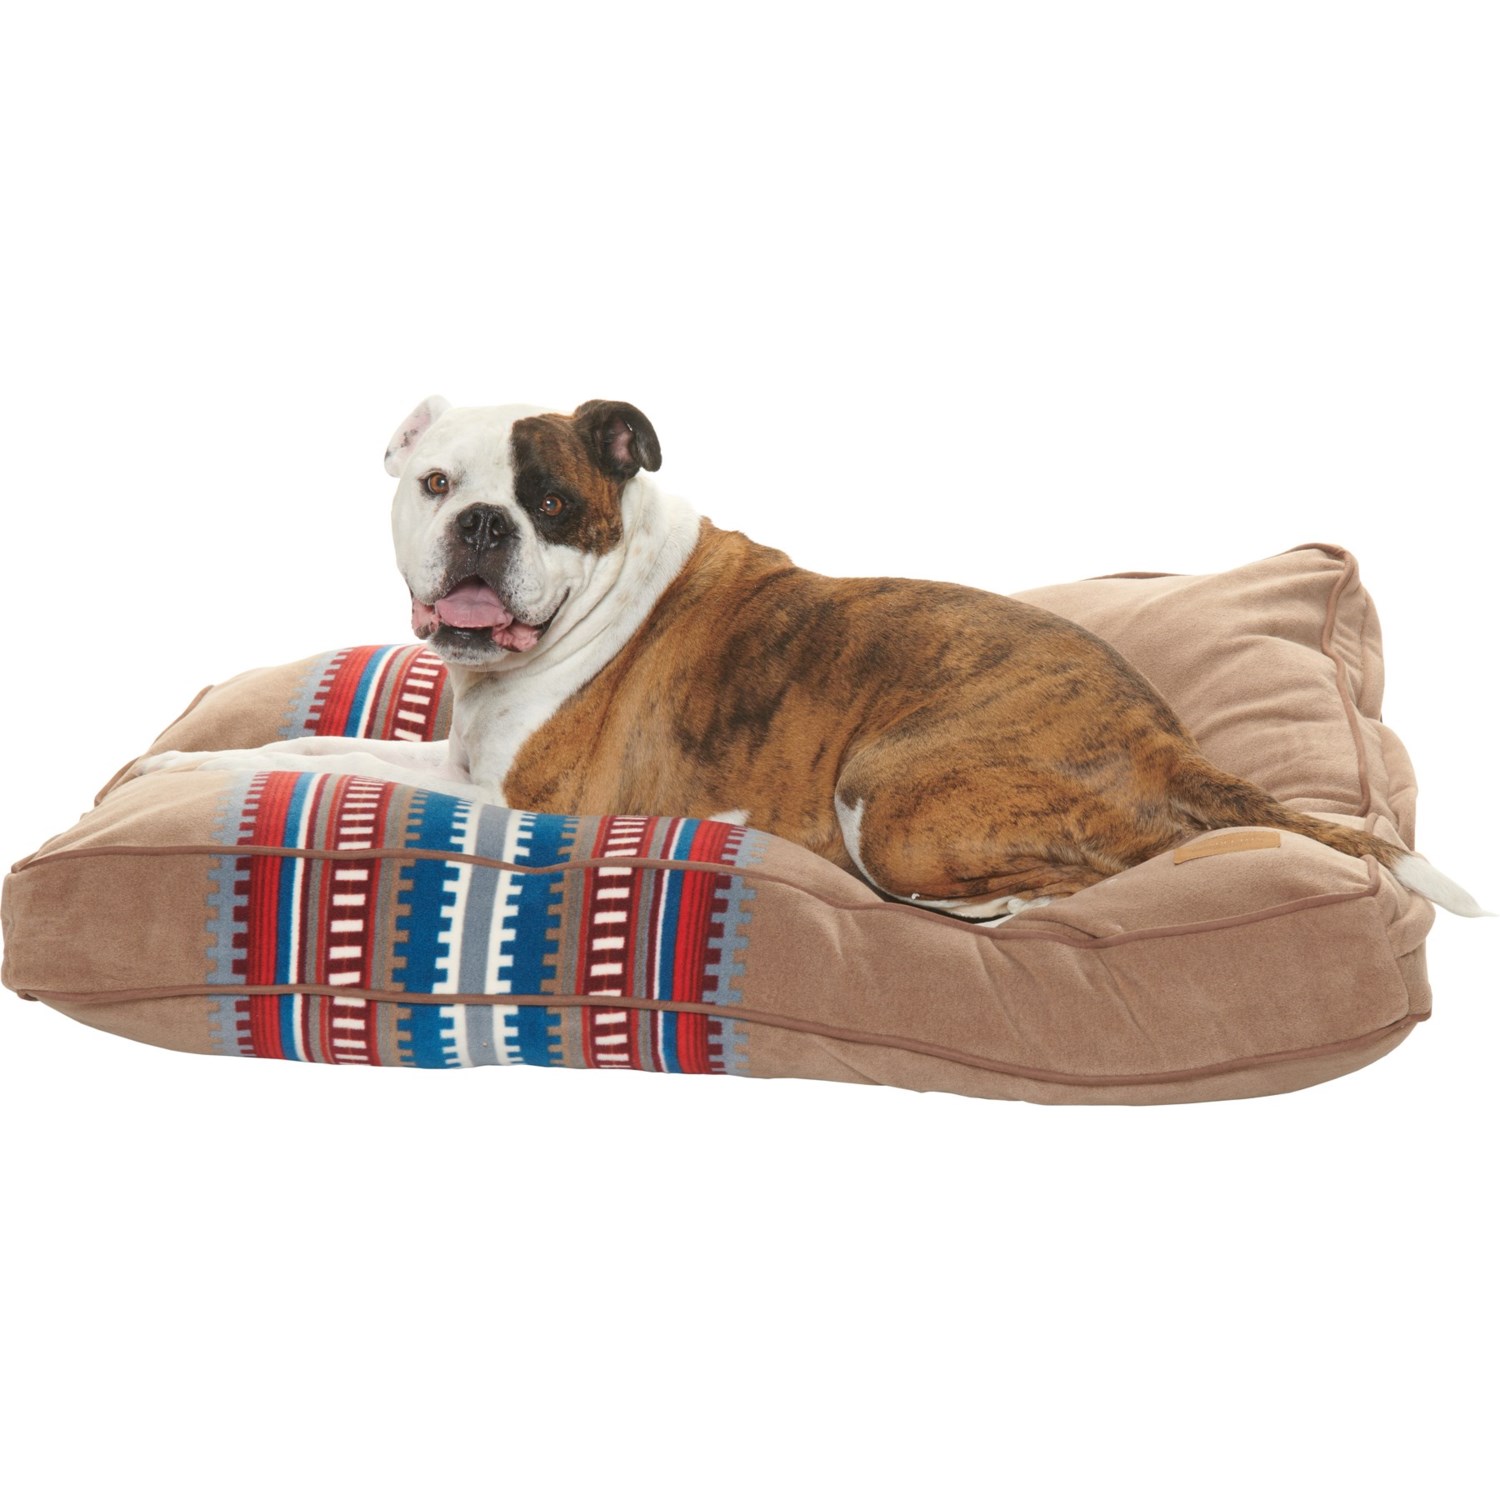 Pendleton Large Dog Bed - 40x32”